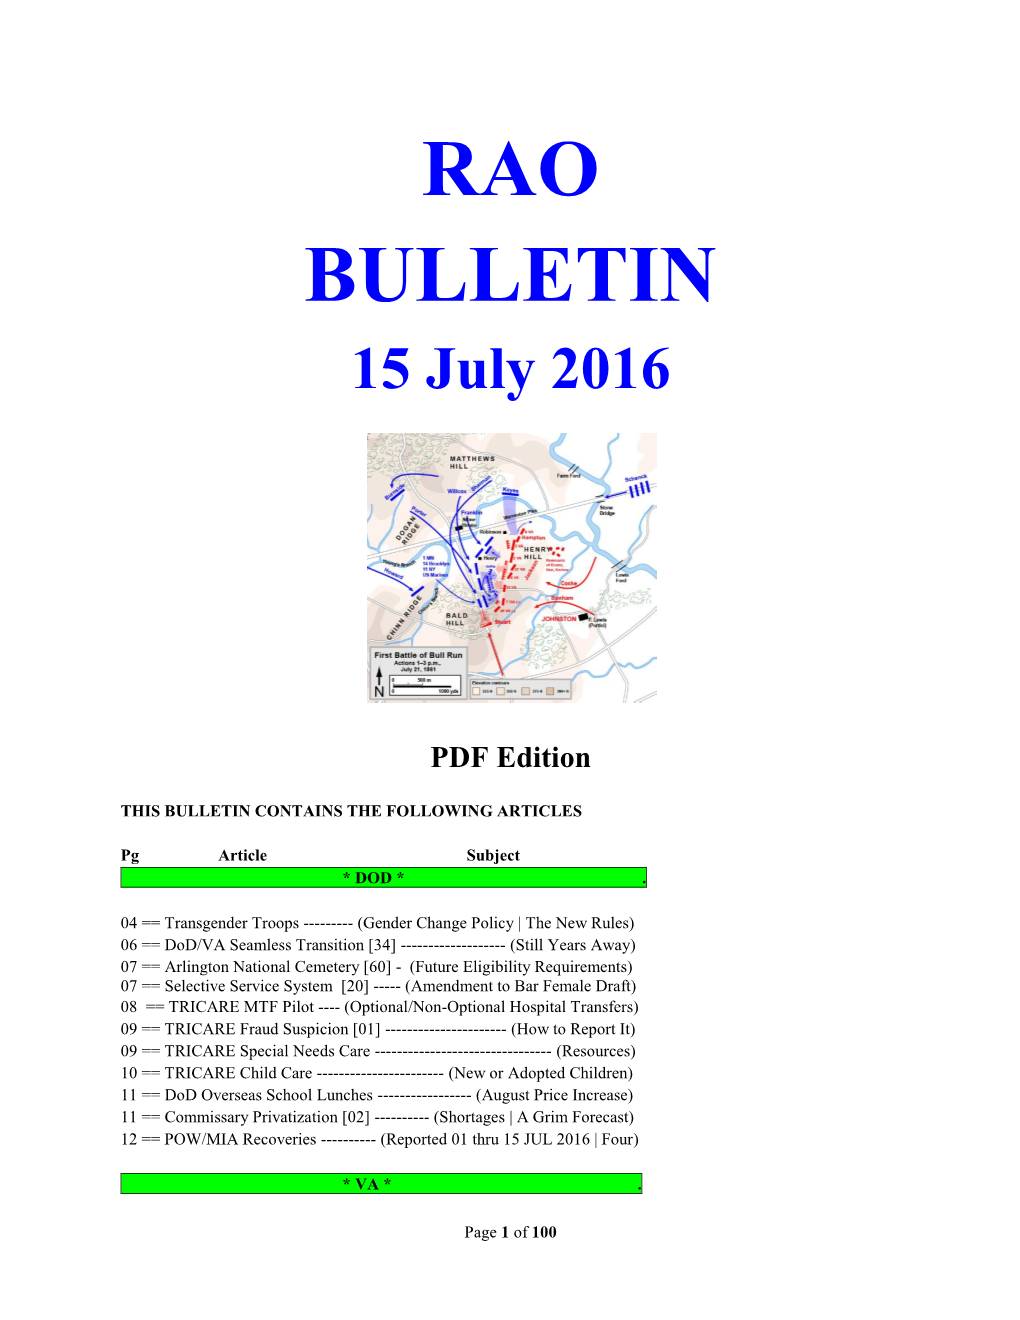 RAO BULLETIN 15 July 2016